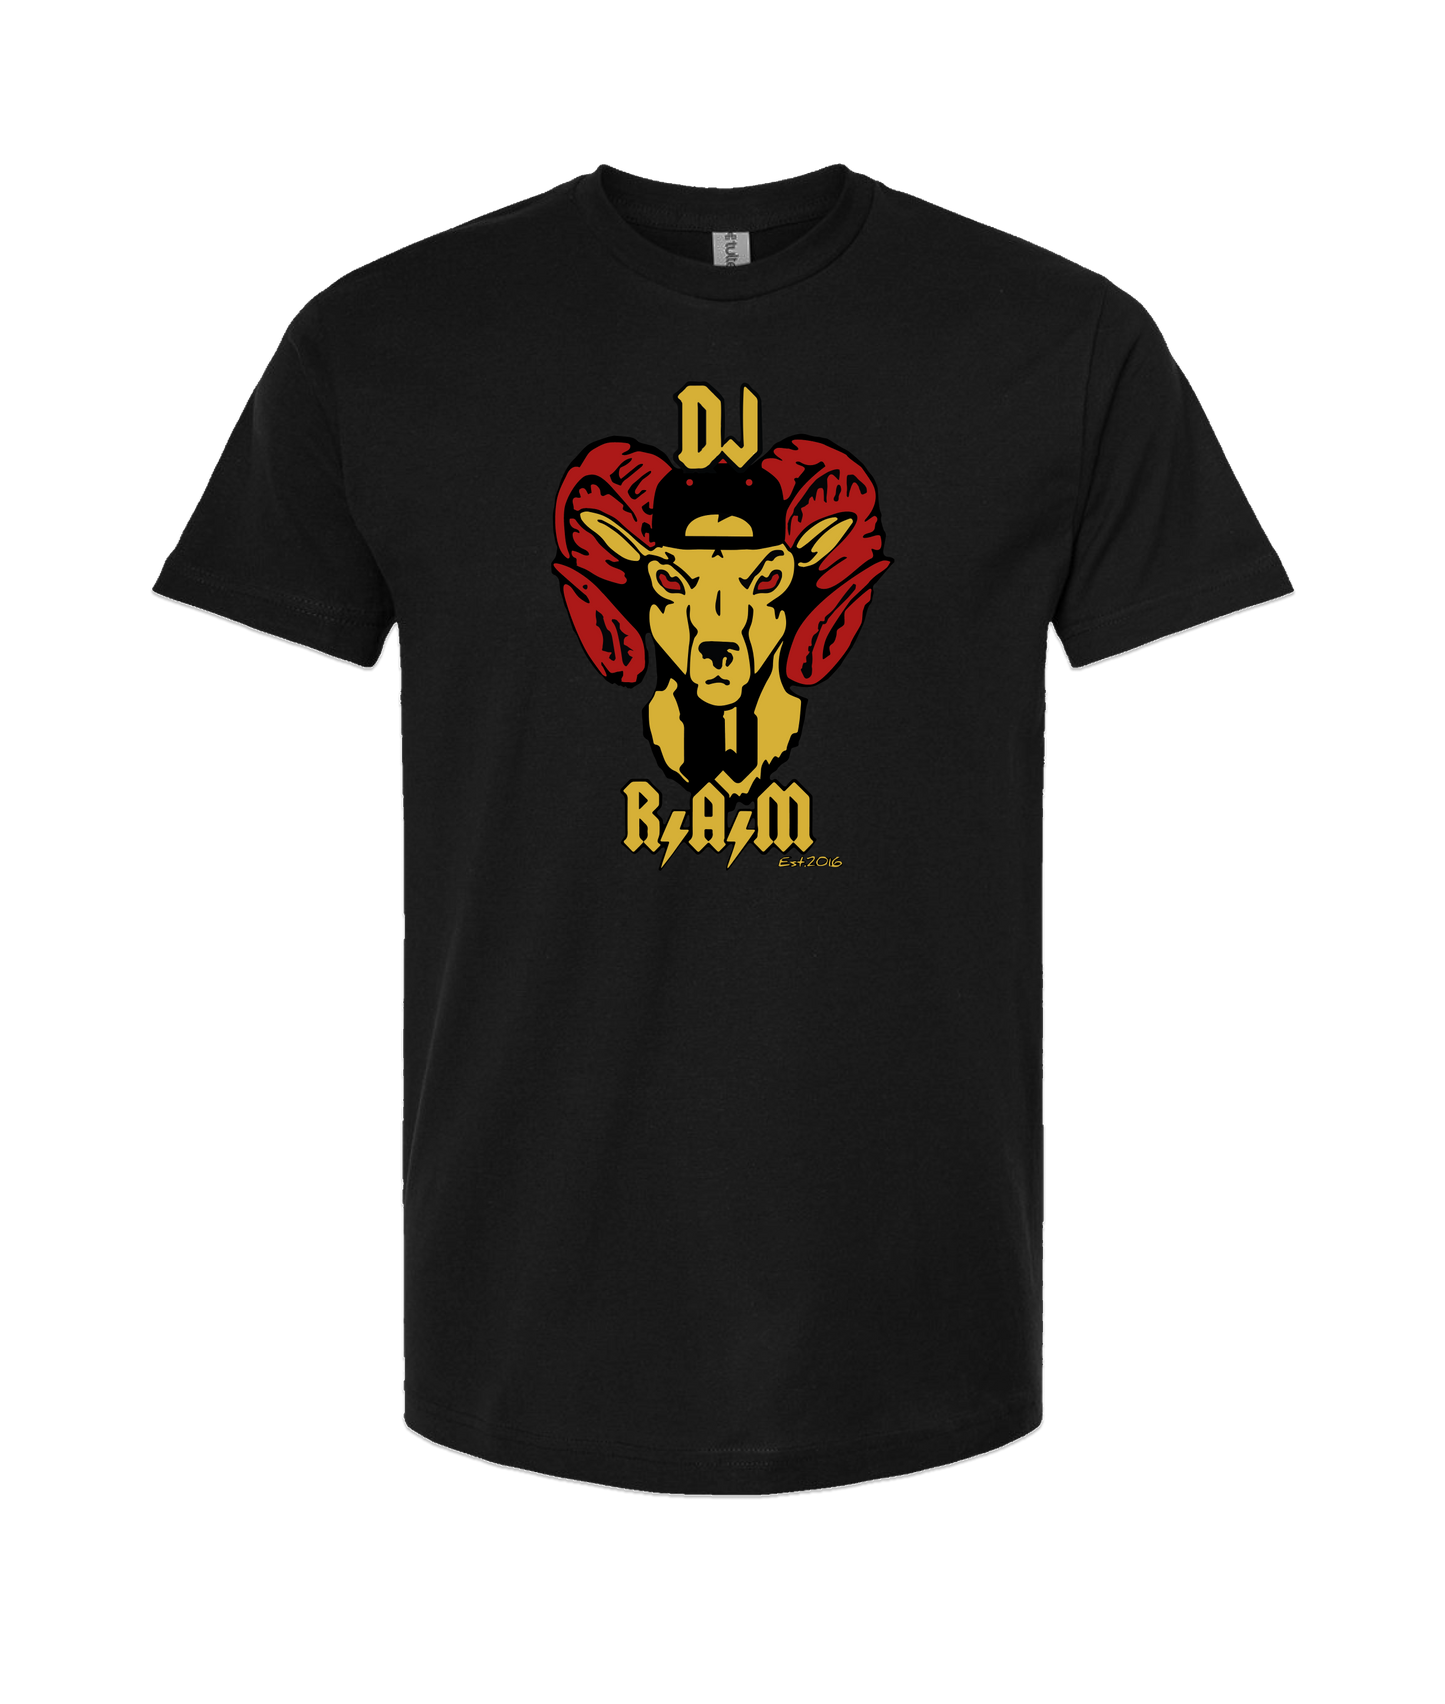 DJ R.A.M - Logo - Black T Shirt